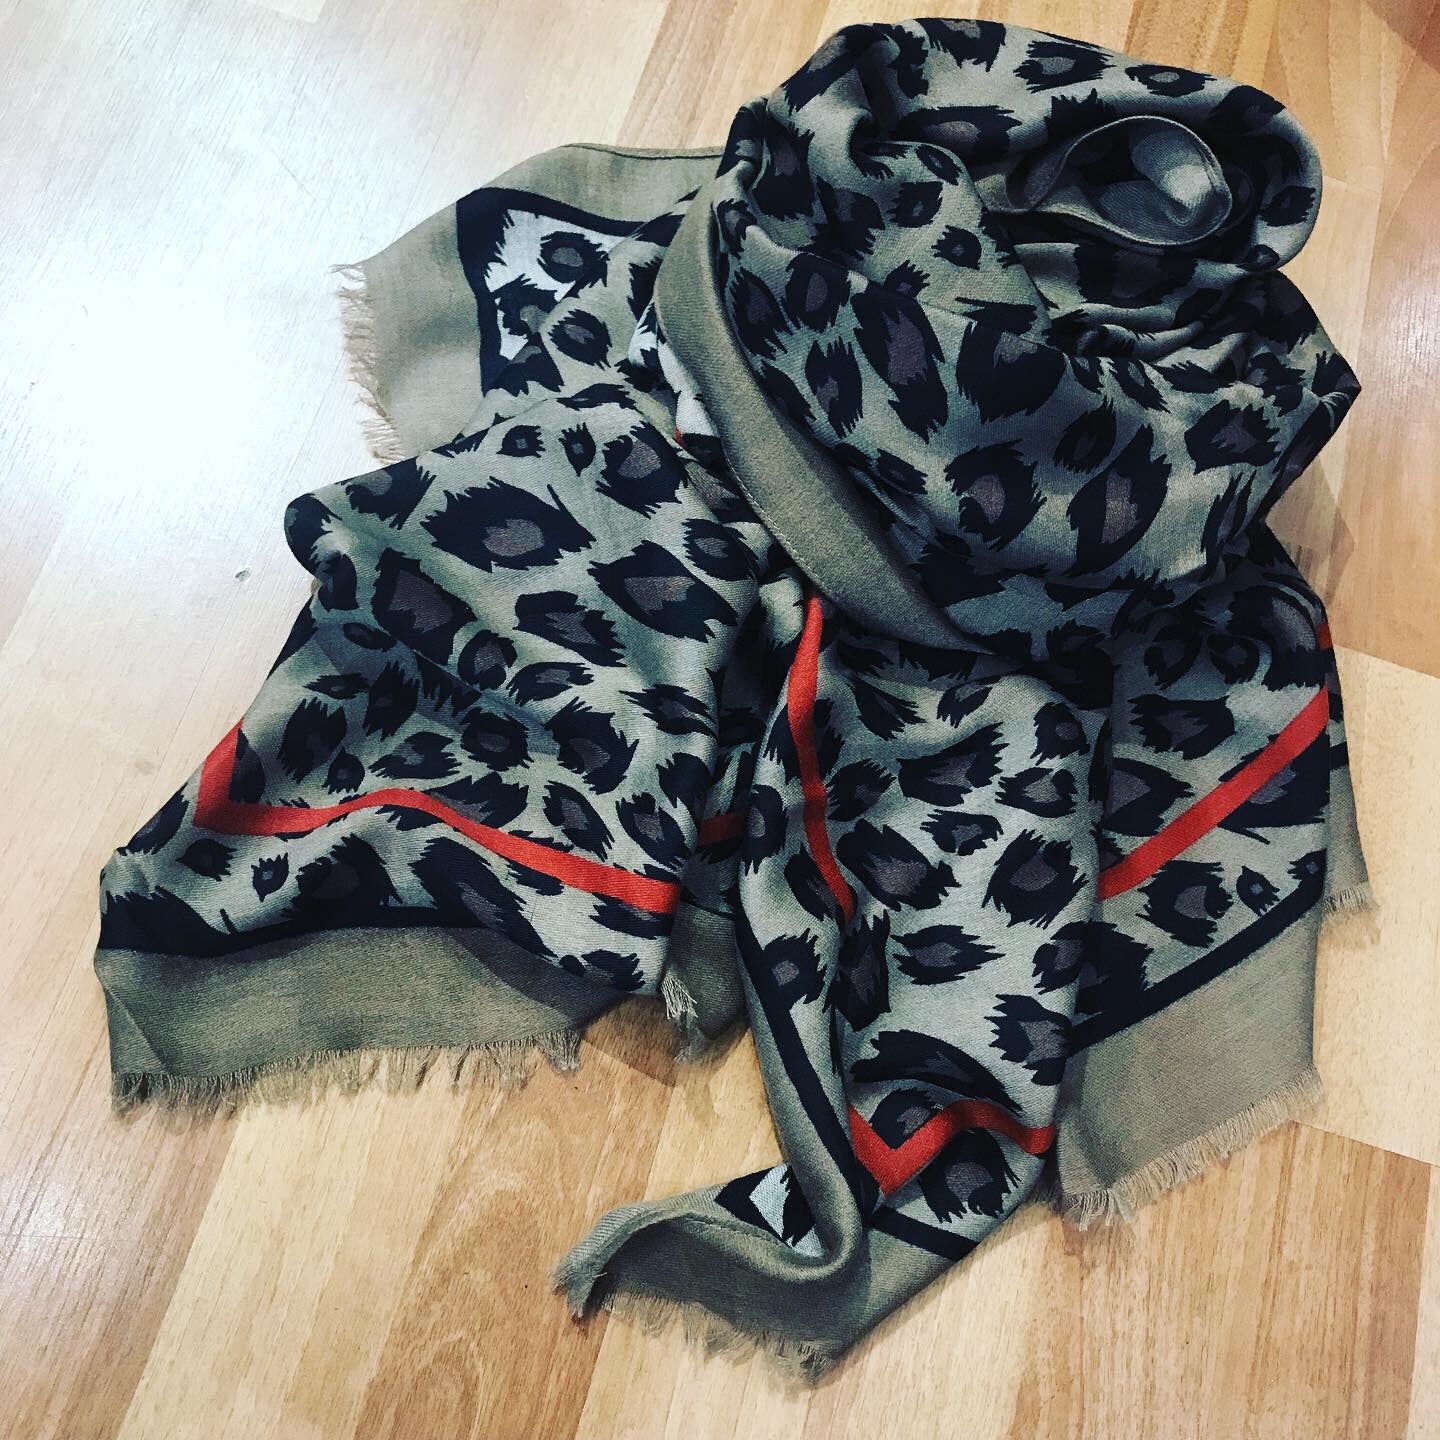 Leopard print scarf 